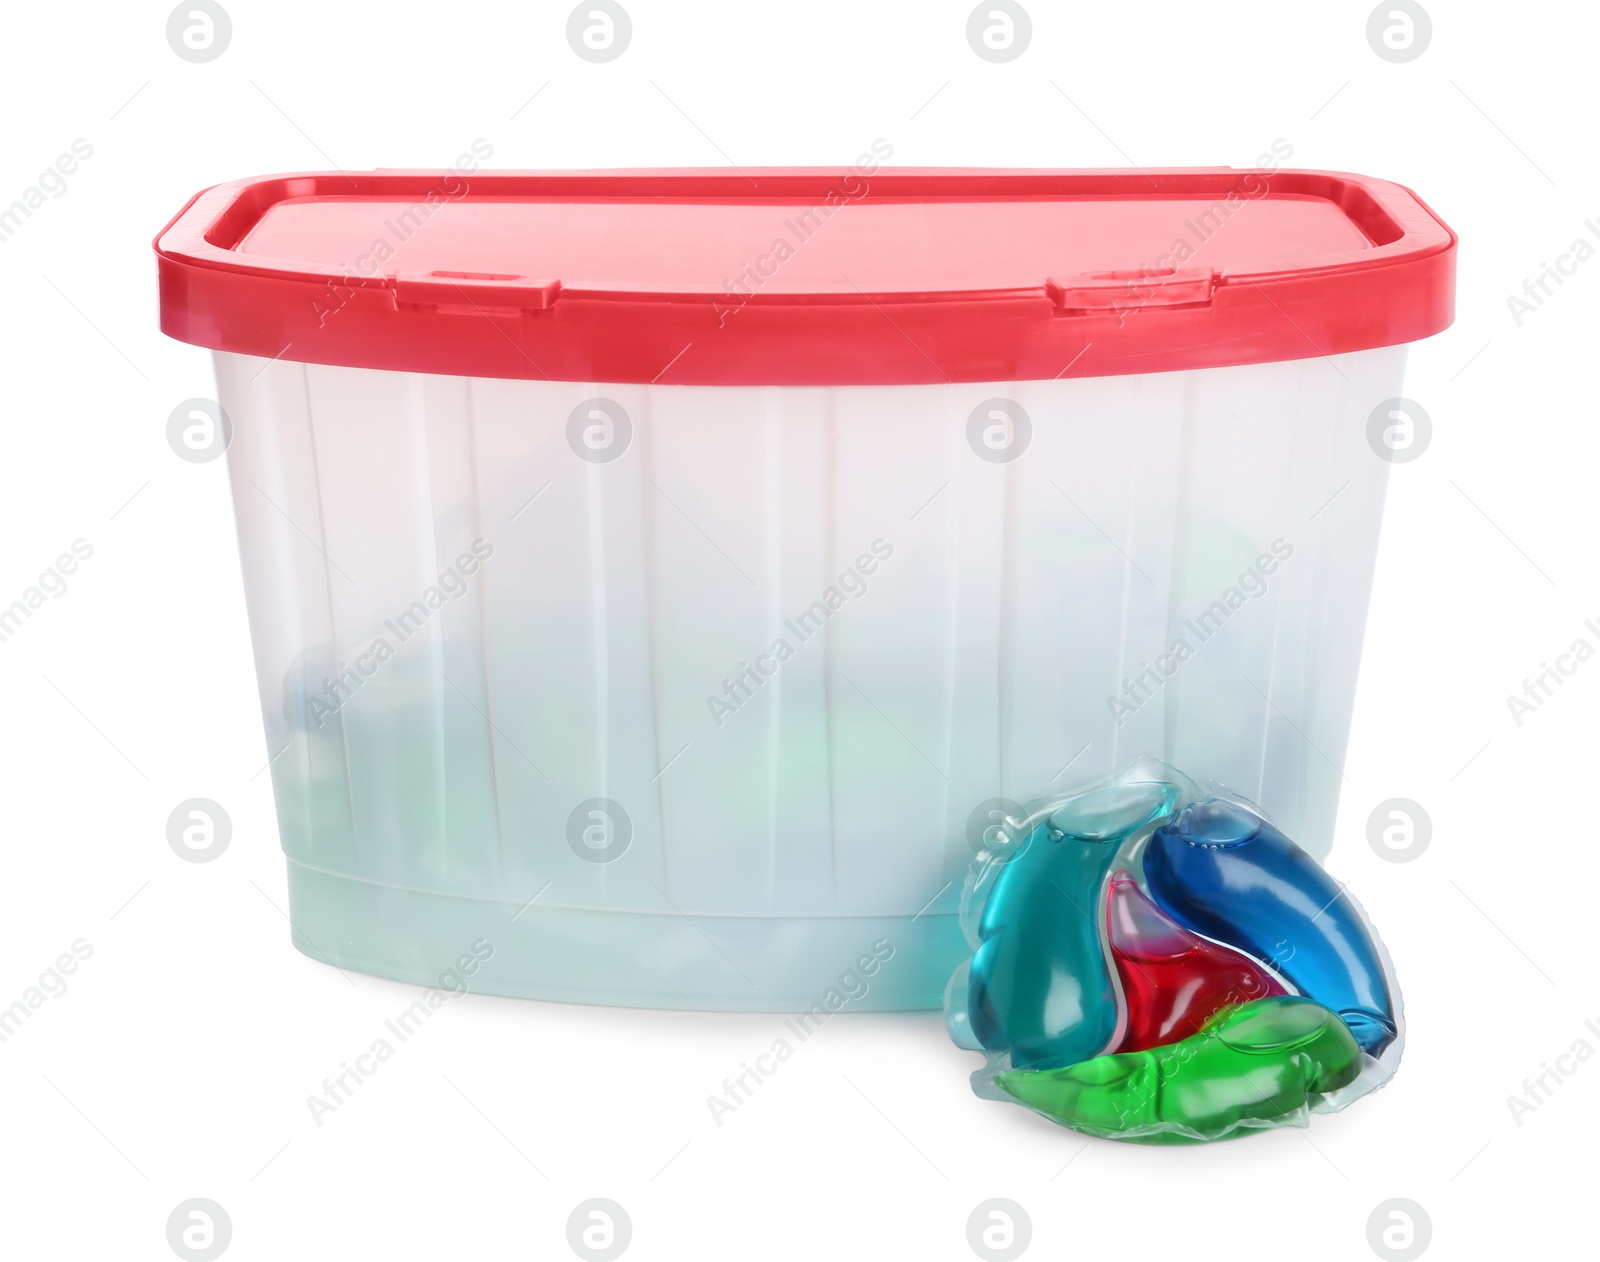 Photo of Laundry capsule and box on white background